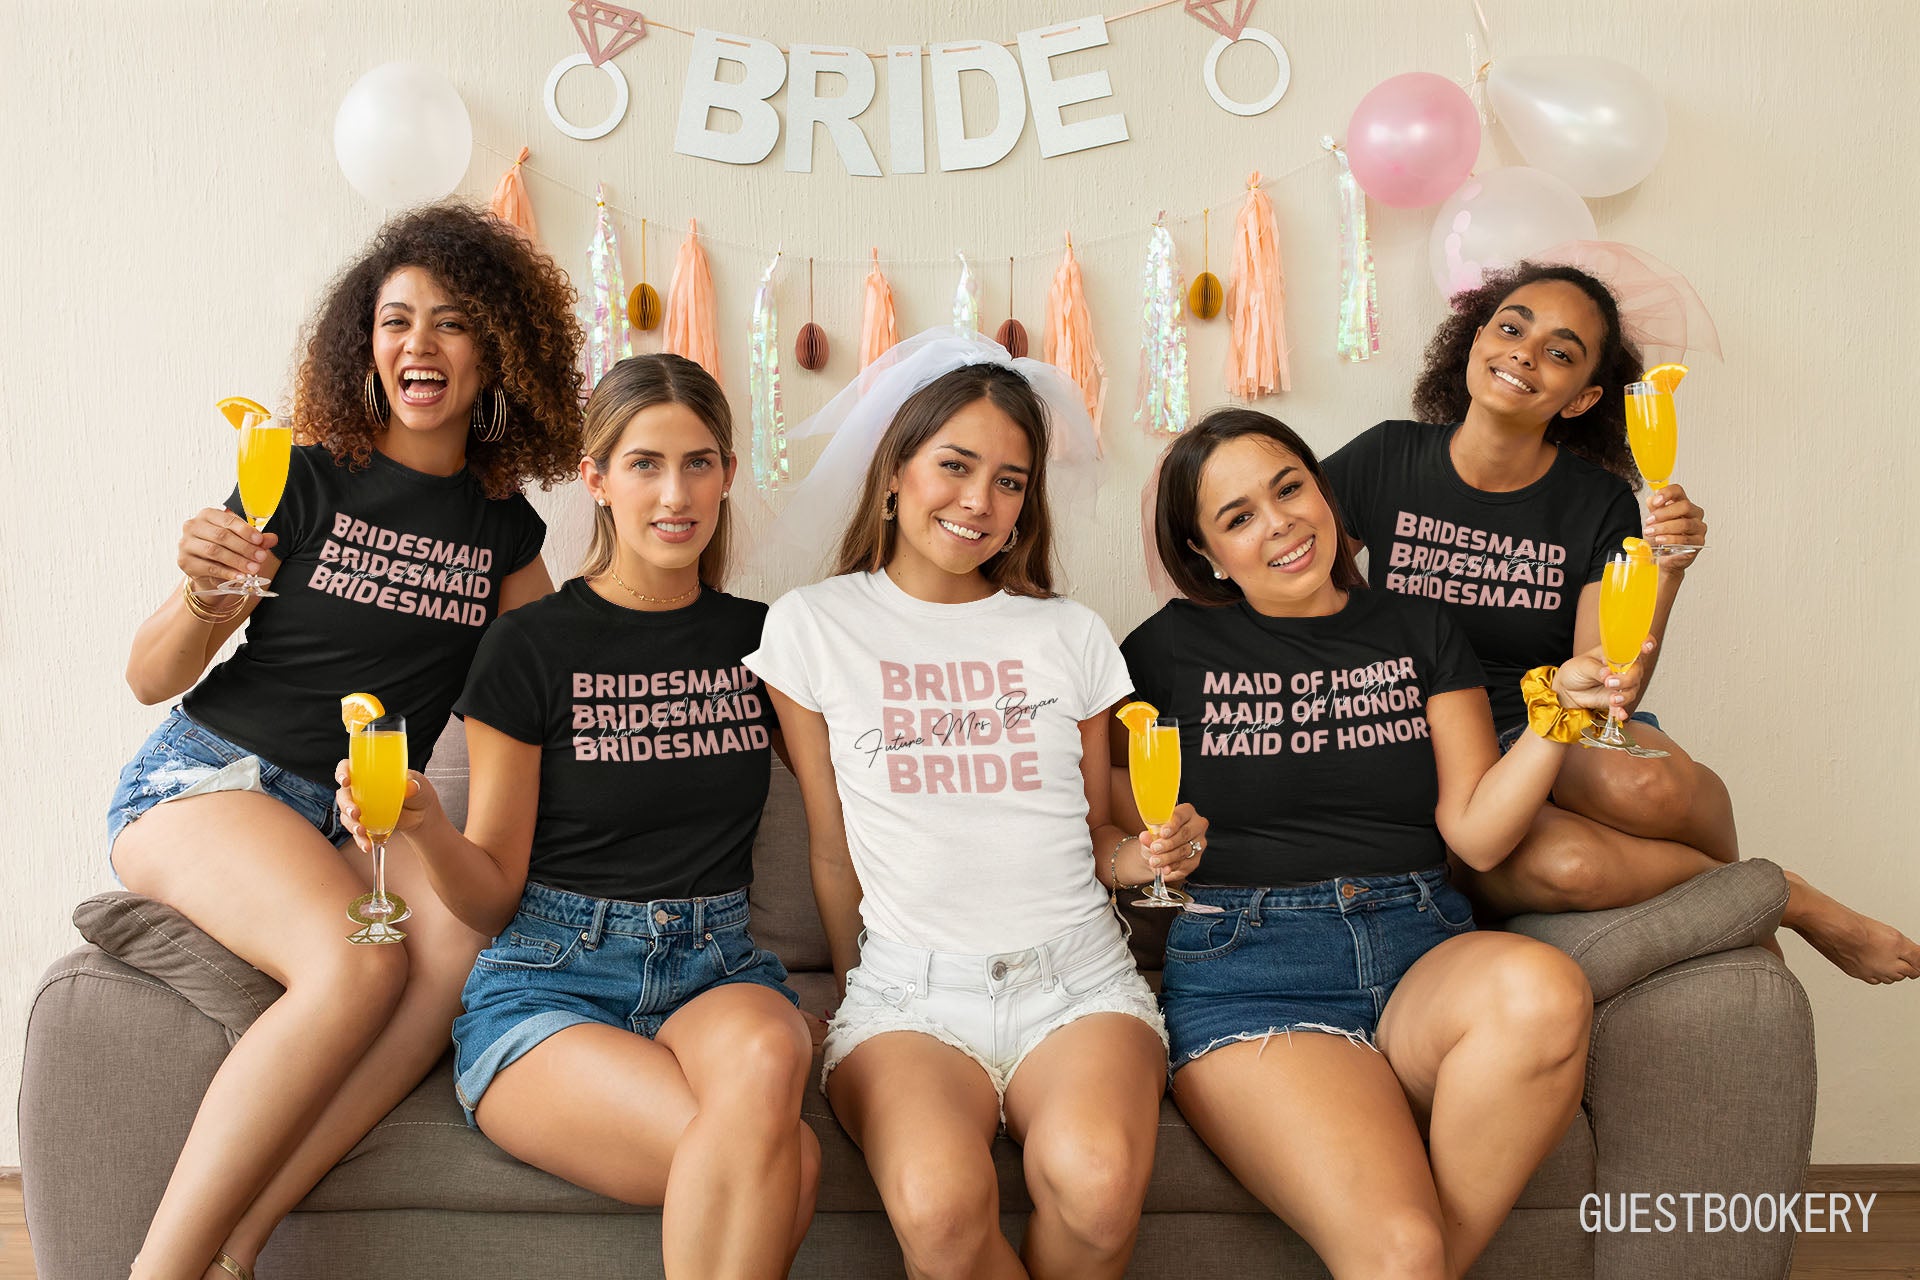 Personalized Bridesmaids shirts Bachelorette Party T-shirts